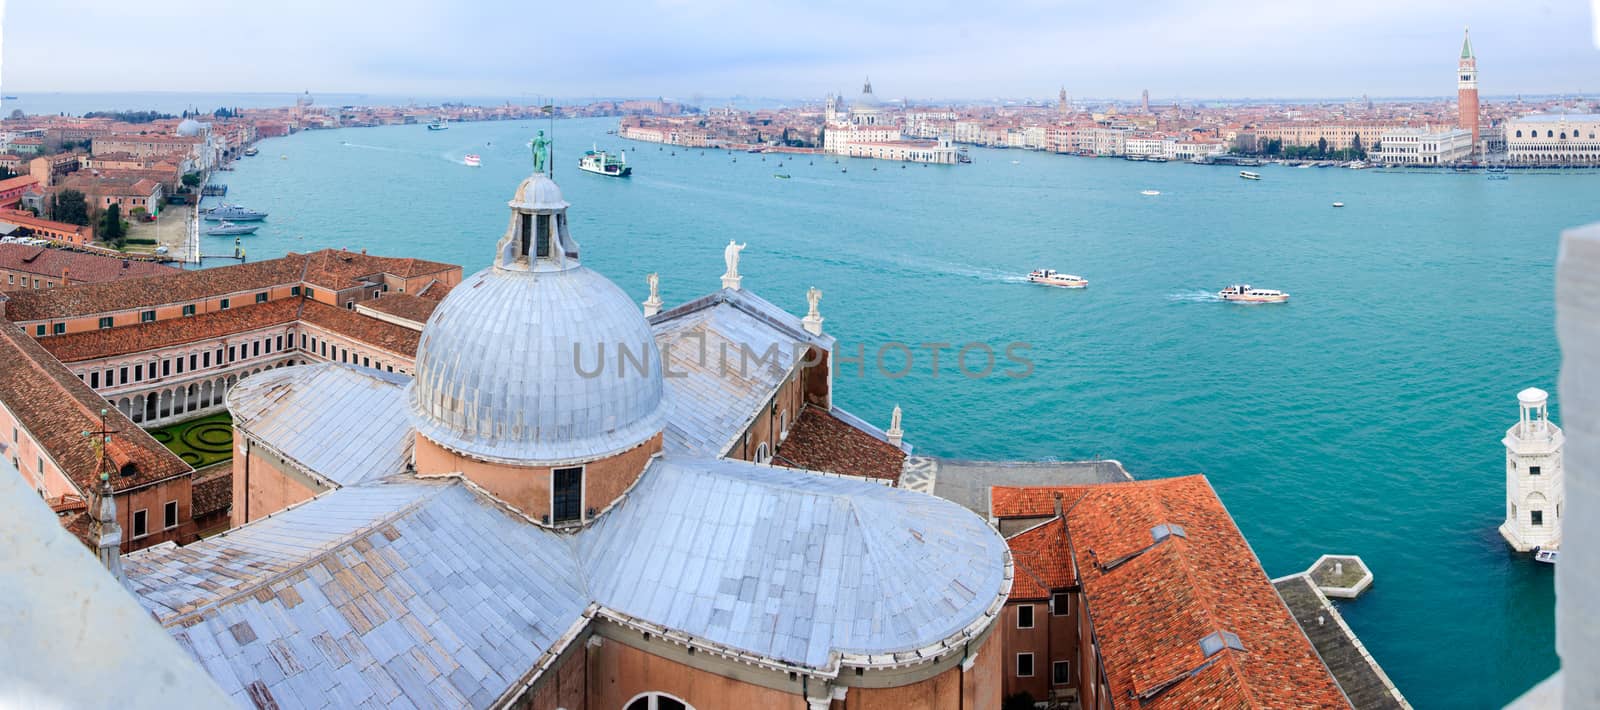 Venice View by RnDmS